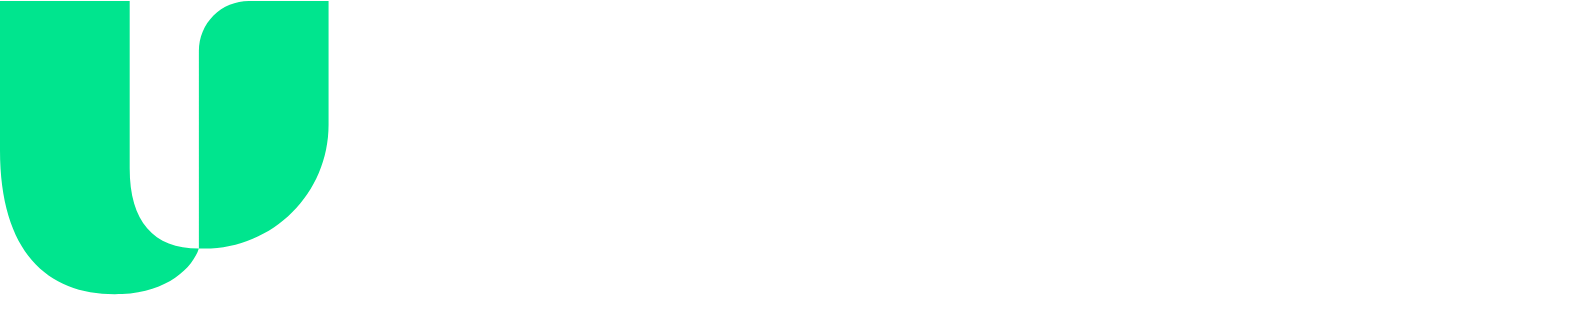 Unisys logo large for dark backgrounds (transparent PNG)